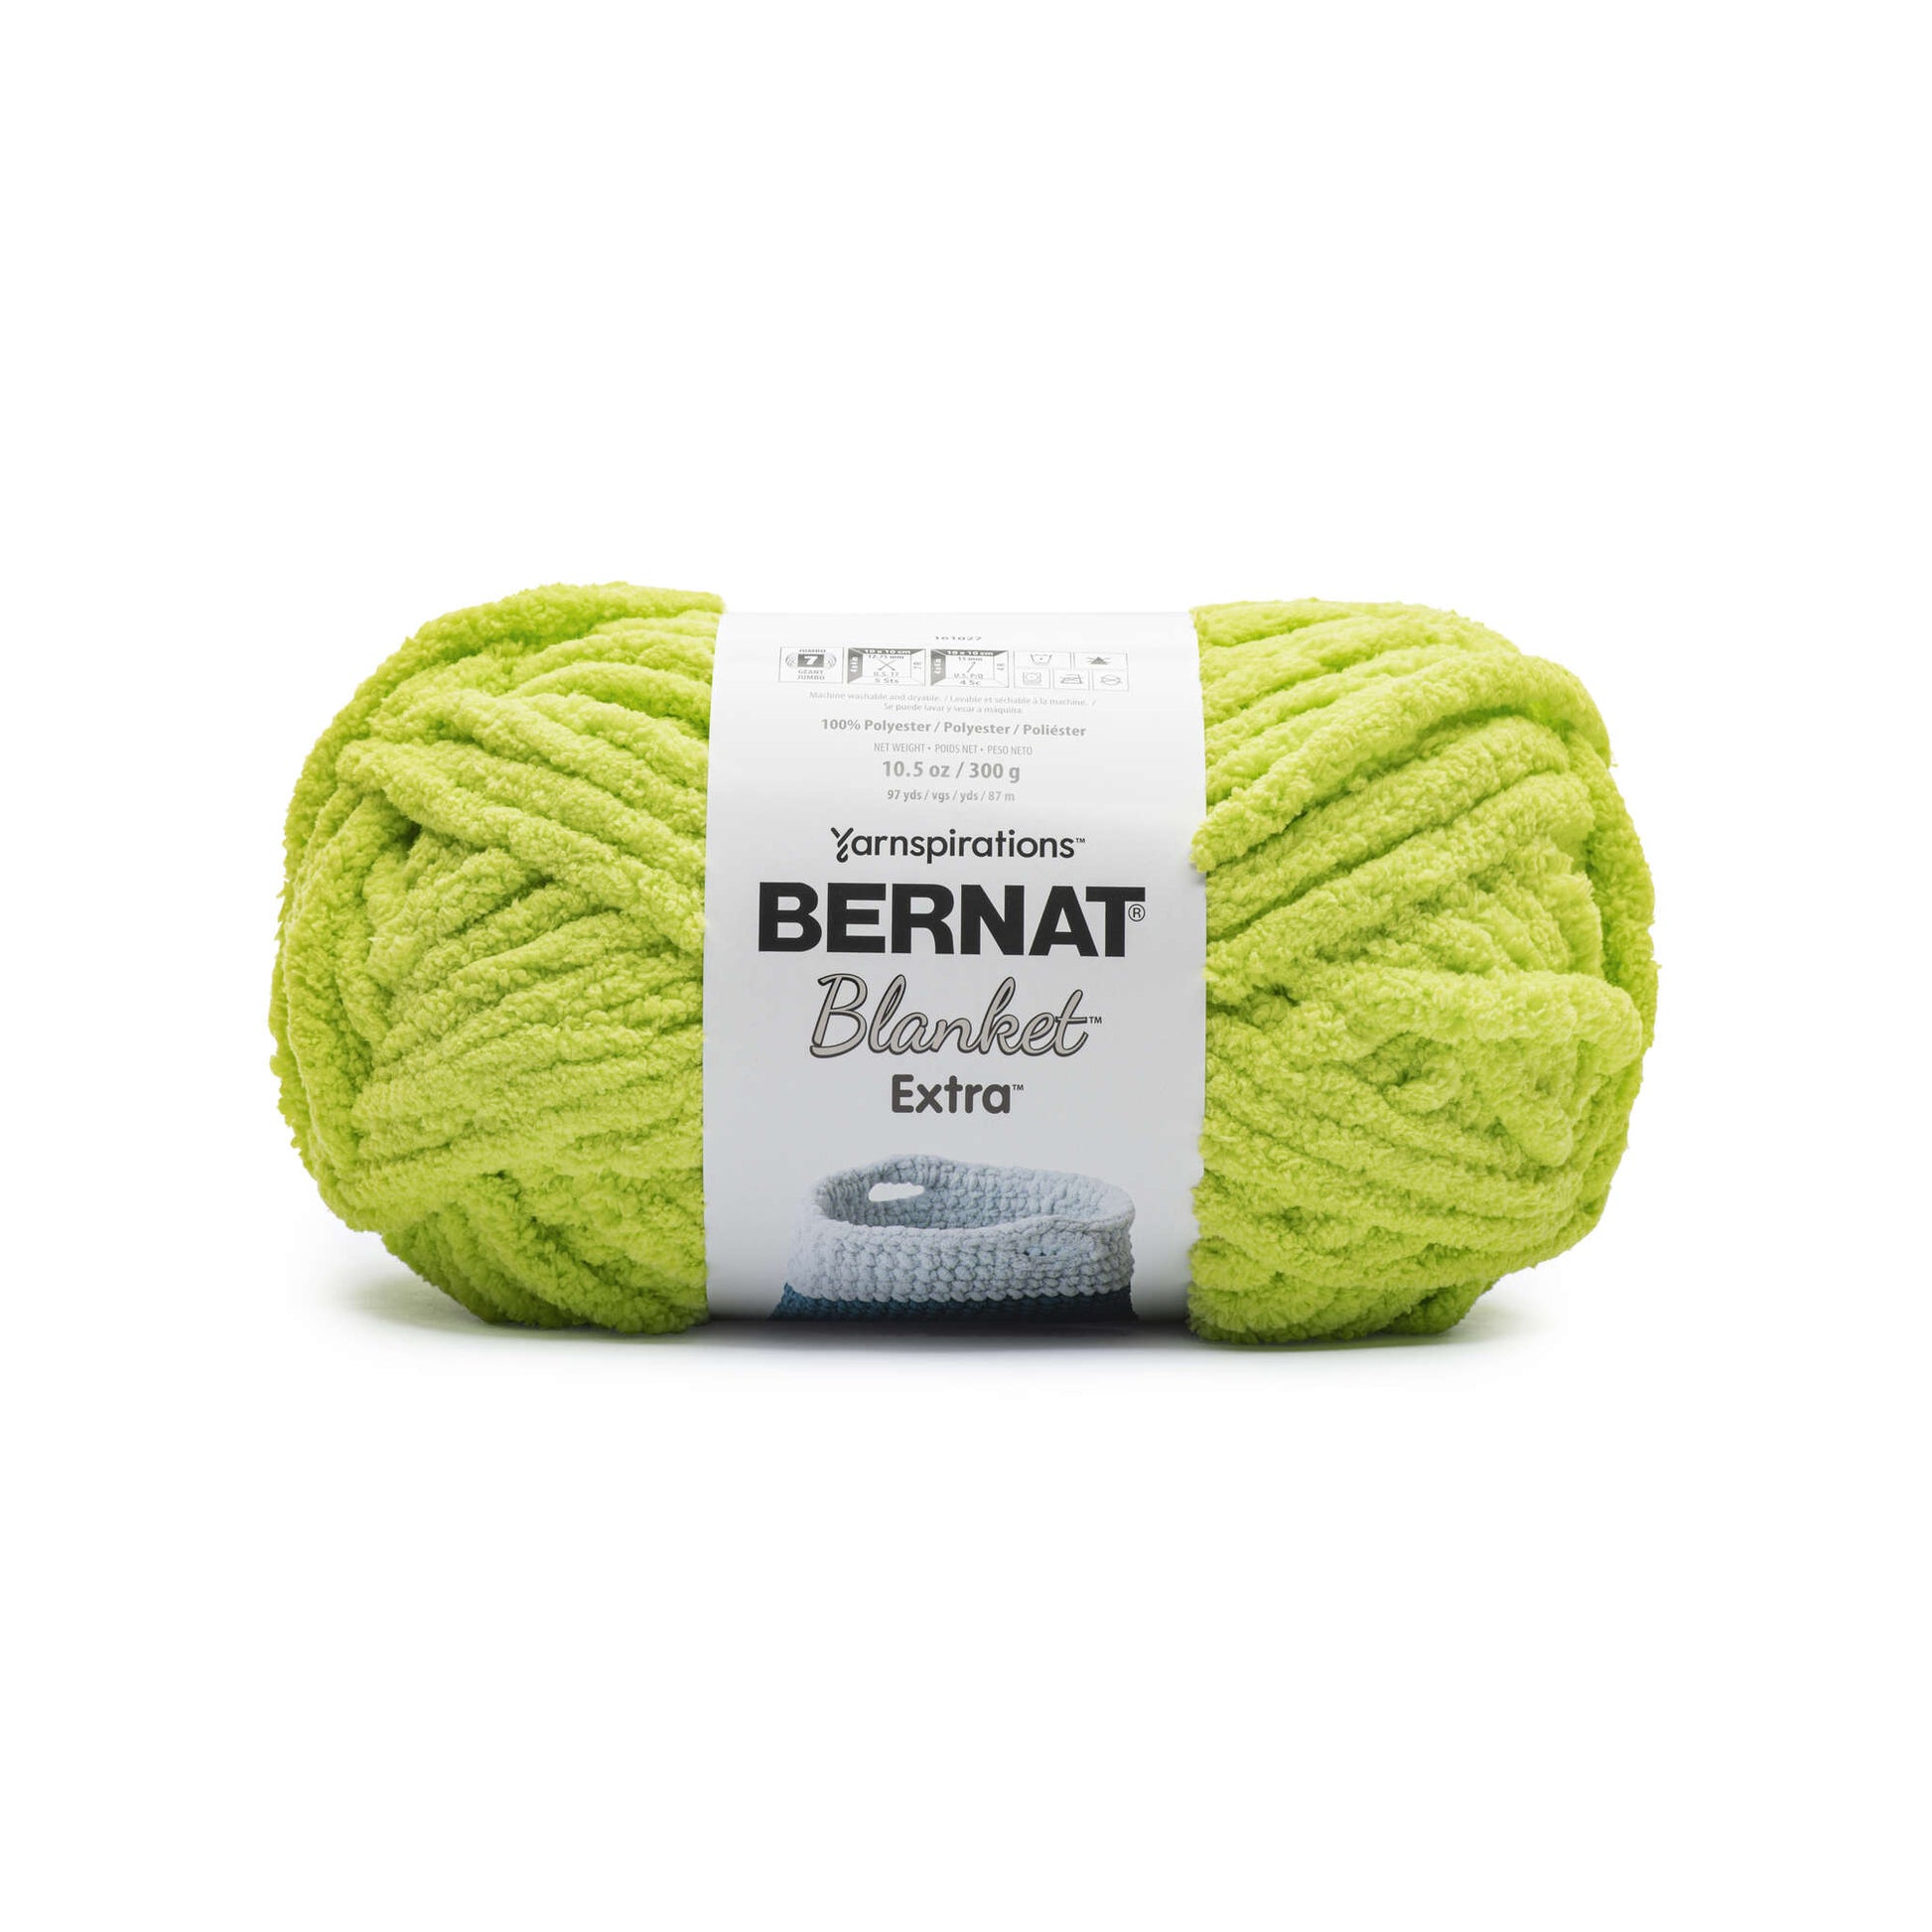 Bernat Blanket Yarn 10.5oz, Smoky Green